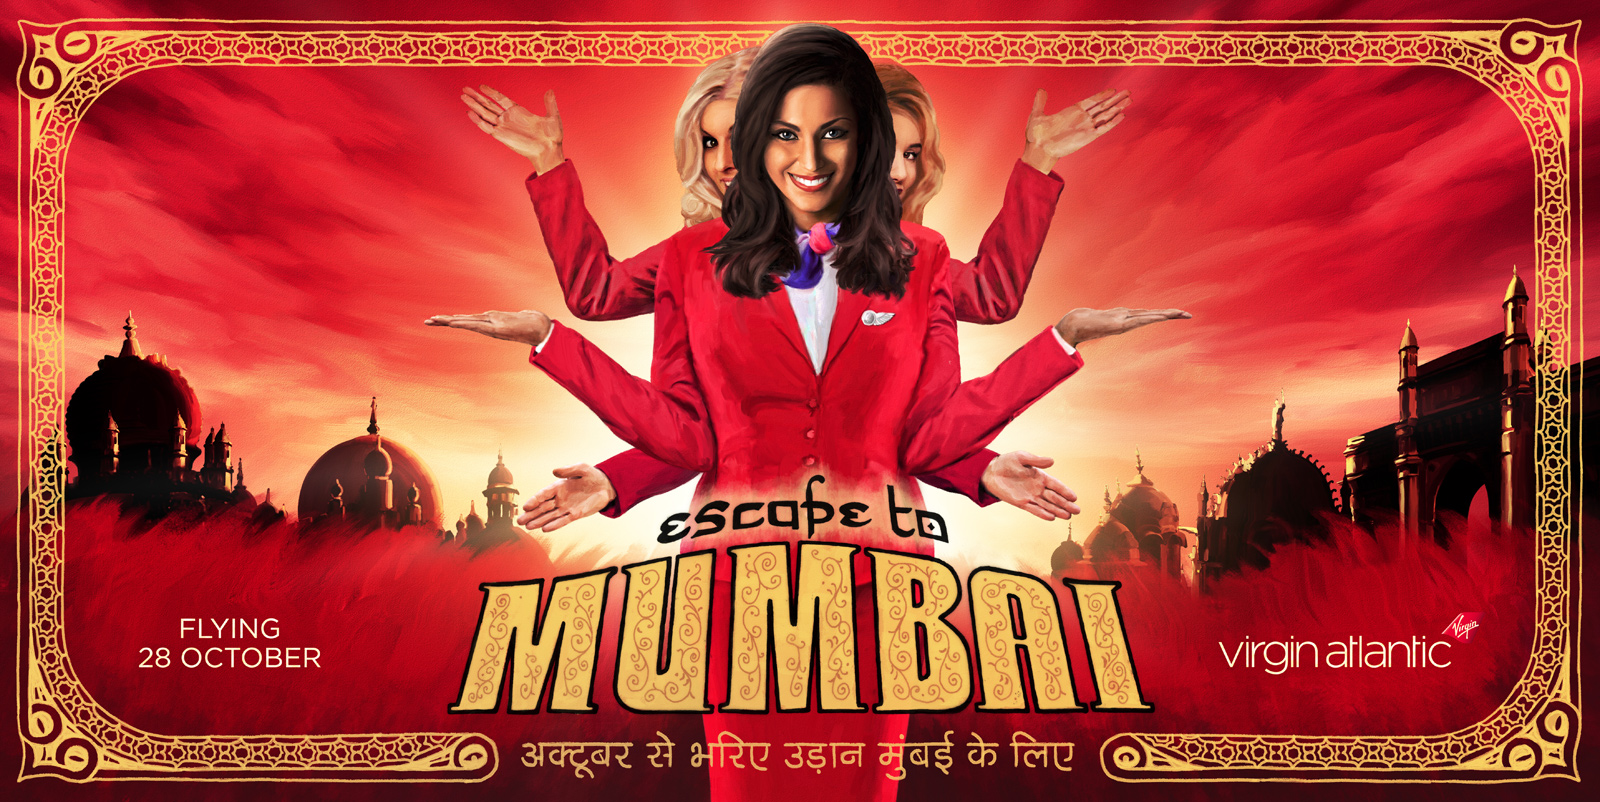 Virgin Atlantic – Escape to Mumbai